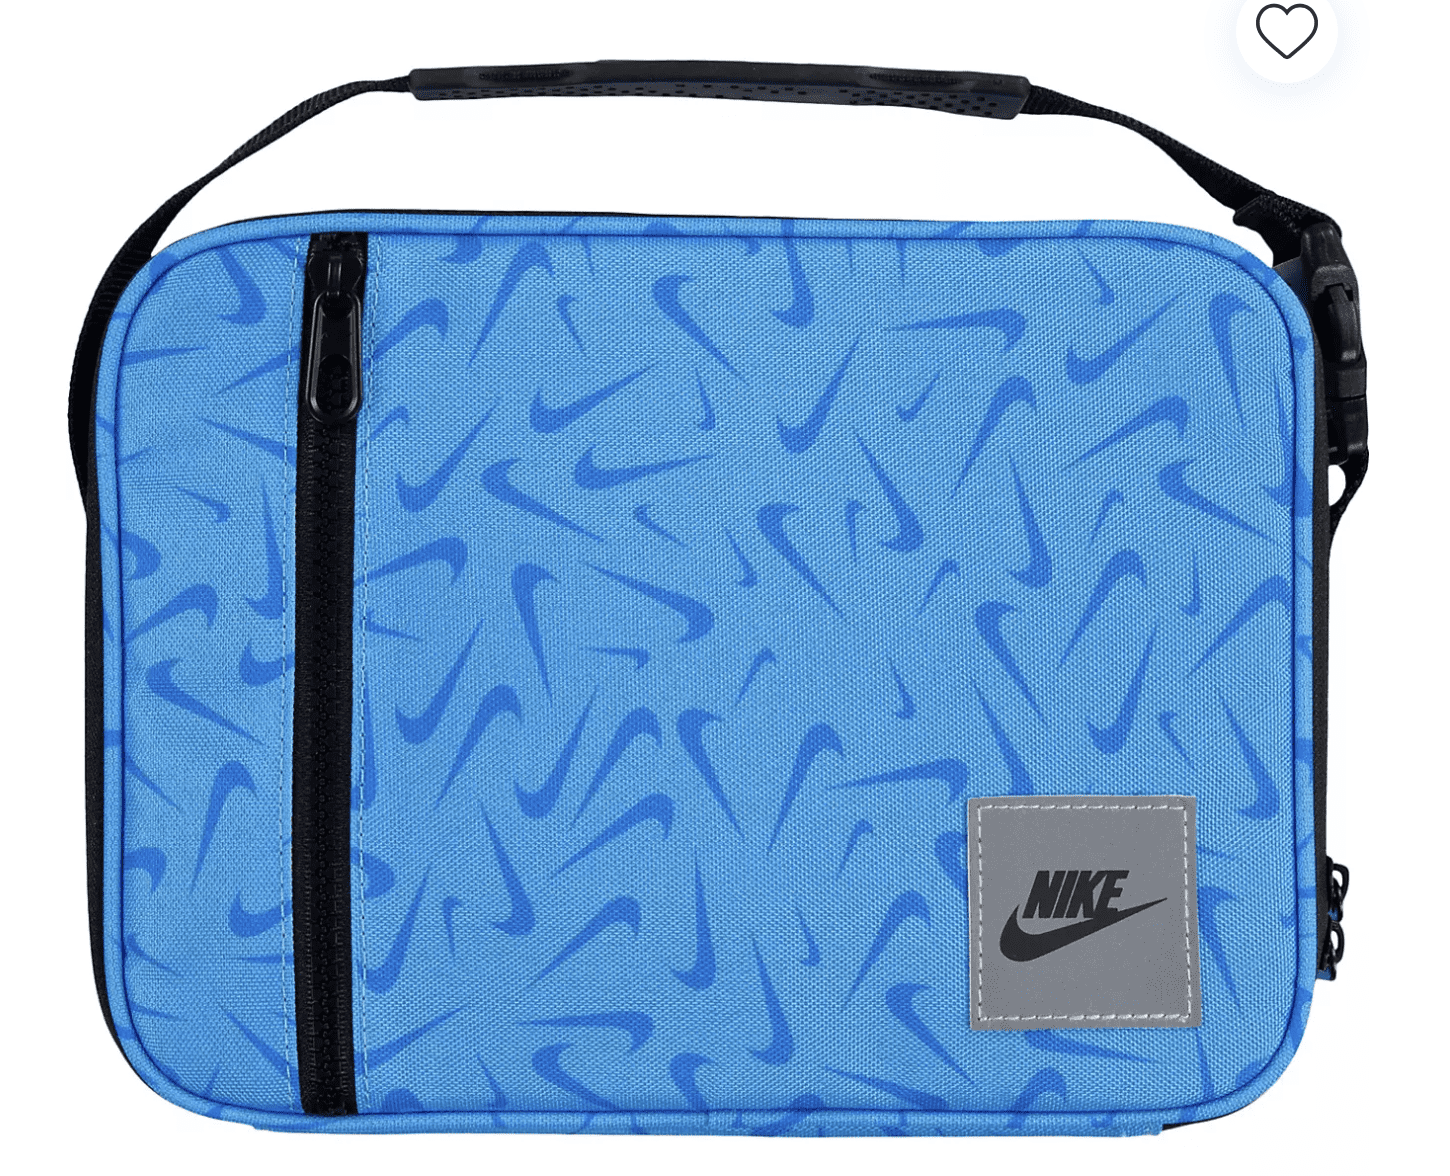 Nike Futura Hard Shell Lunch Box Carrier - Walmart.com